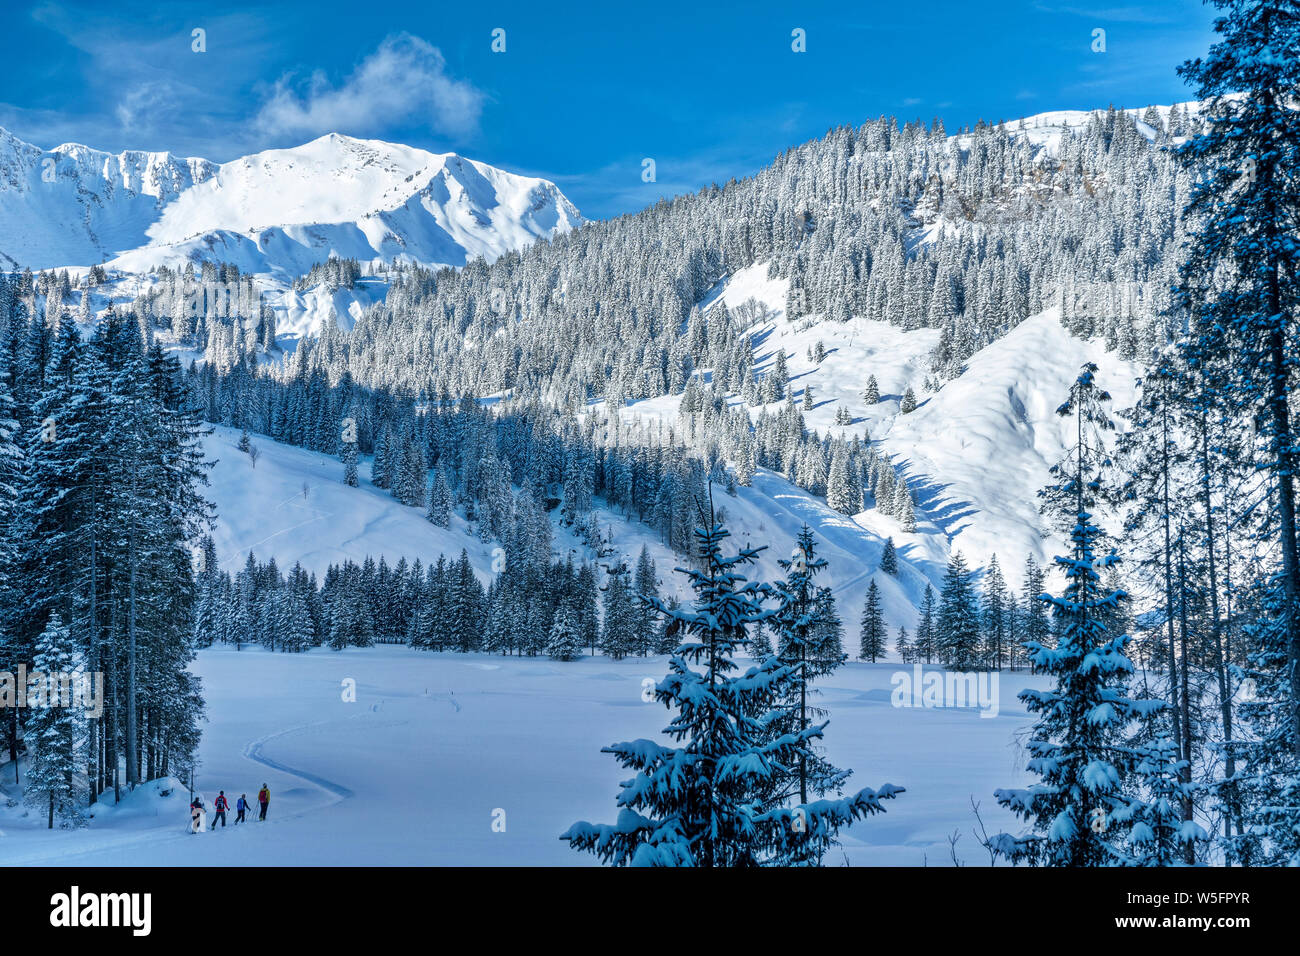 Austria, Kleinwalsertal (little Walser valley), Allgau Alps, snowshoeing and Ski mountaineering in the Schwarzwassertal; Norway Spruce forest Stock Photo